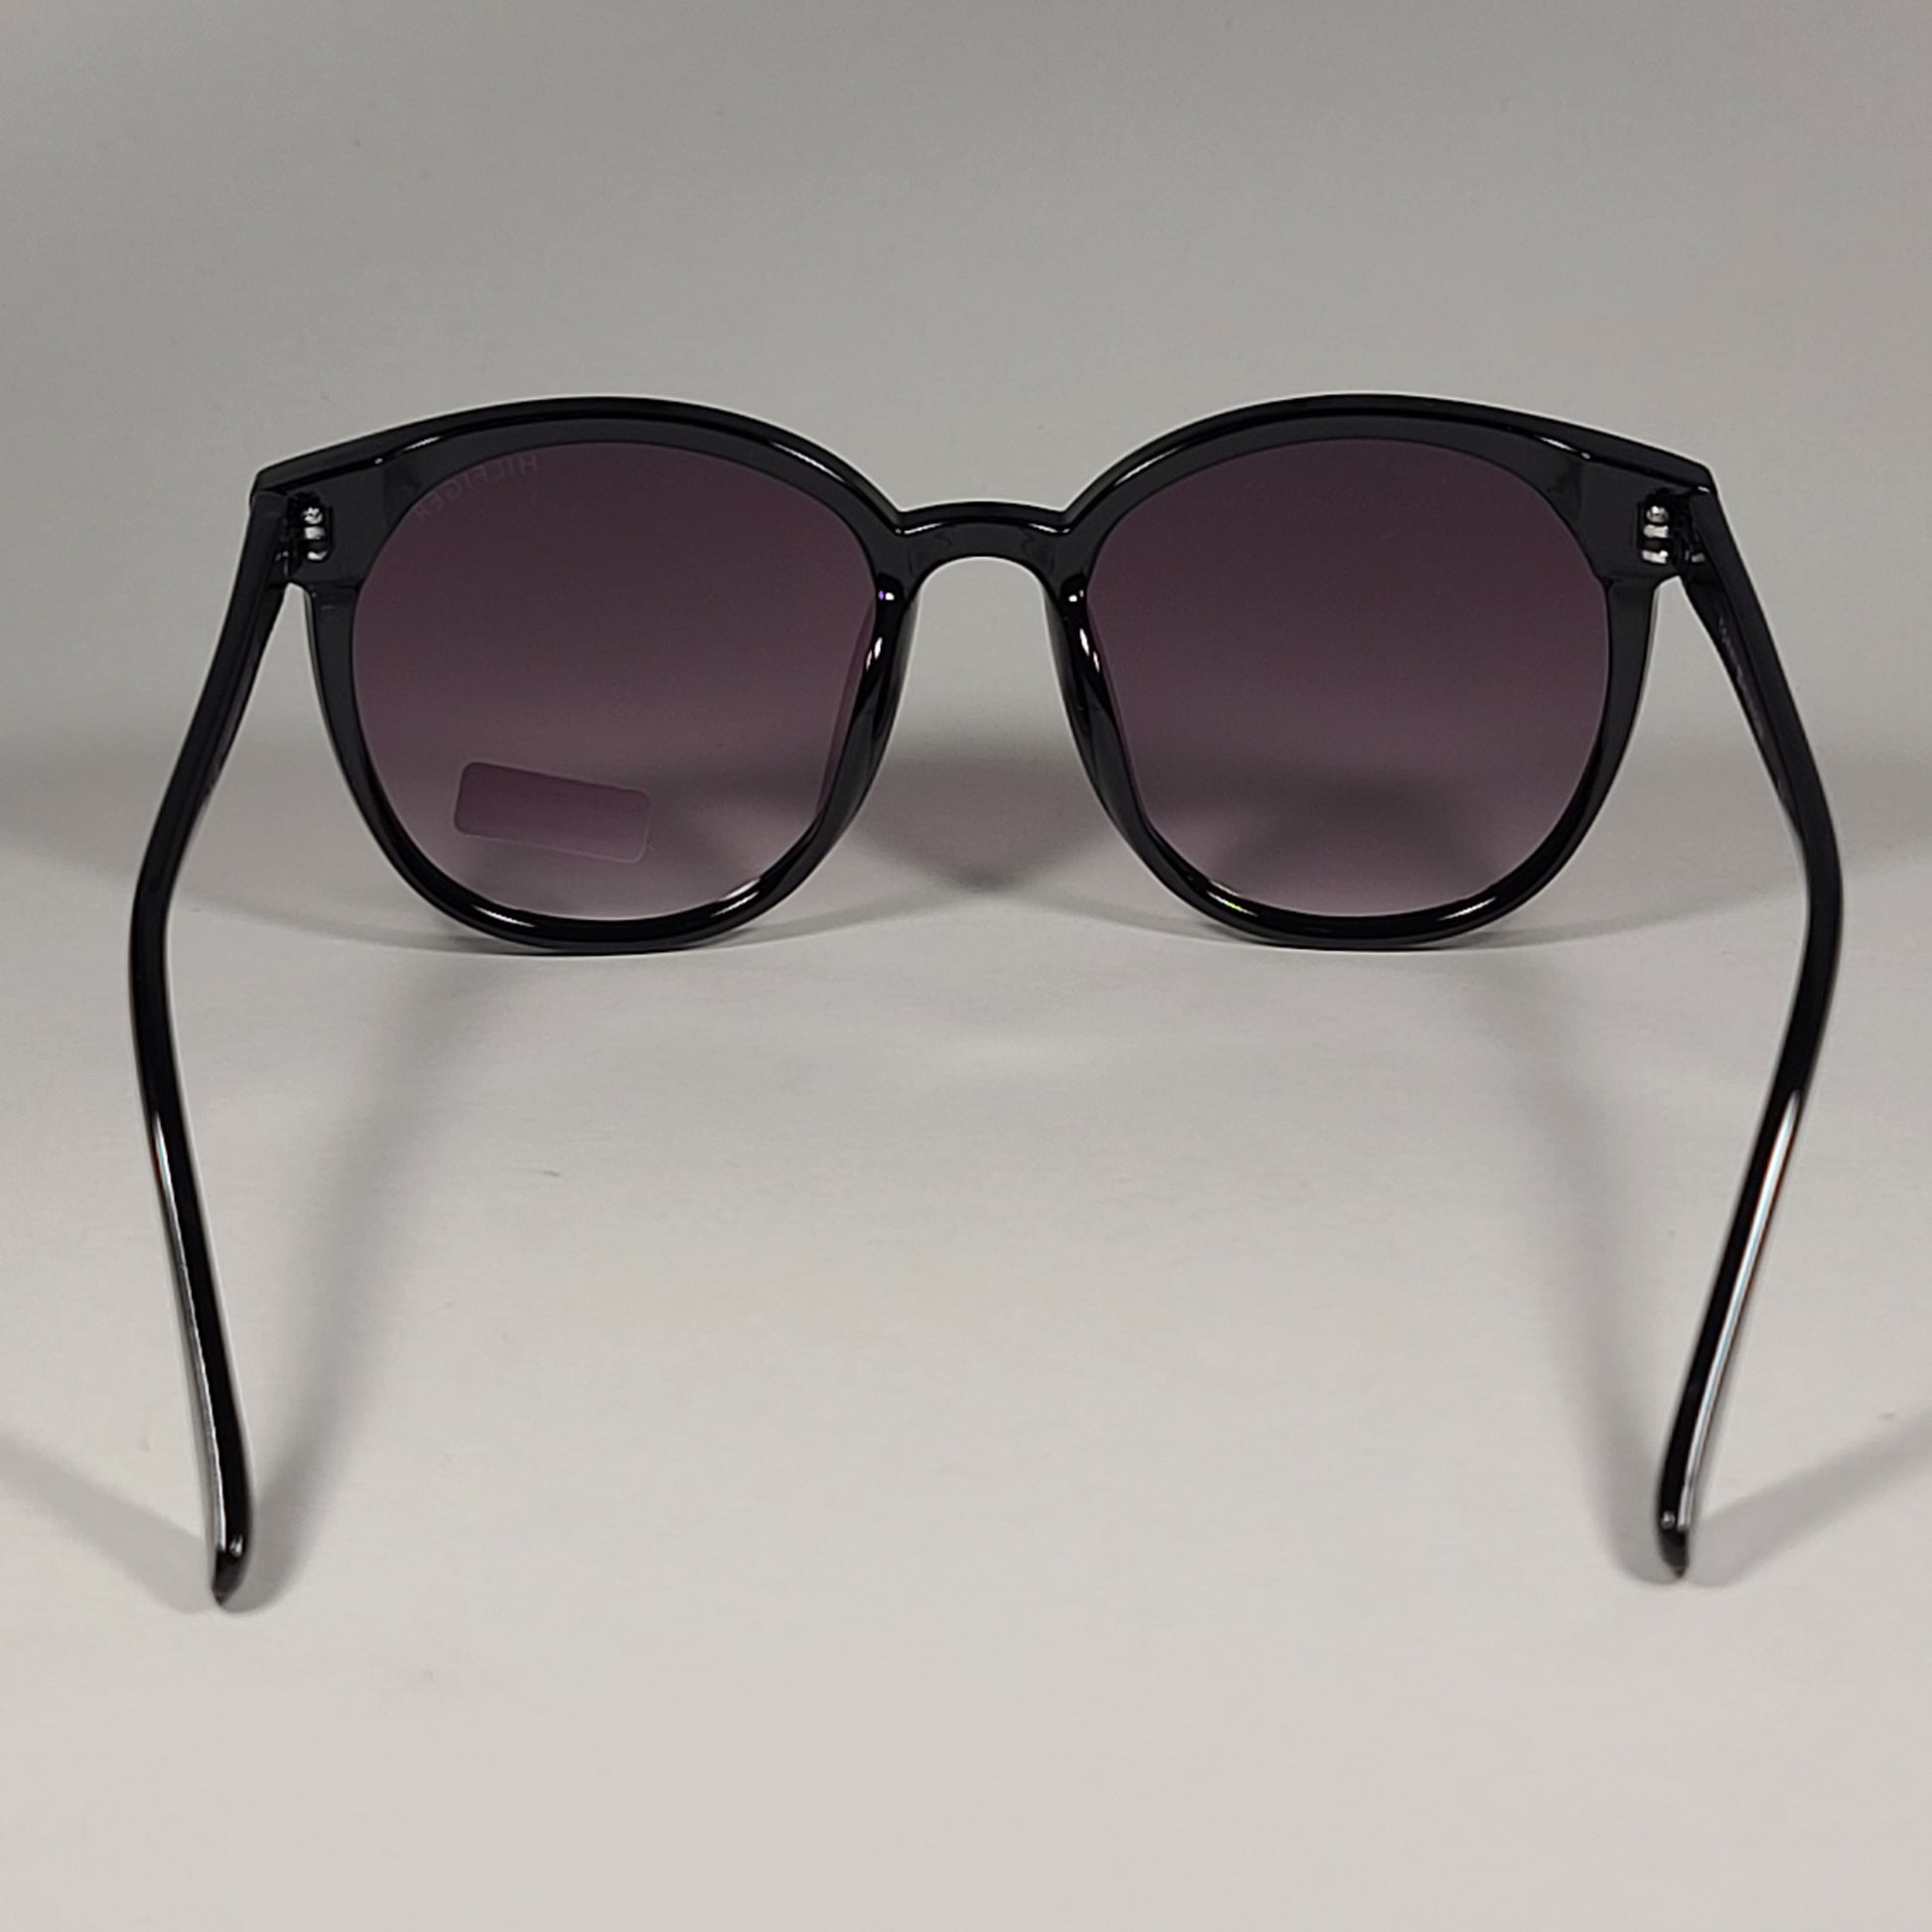 Tommy Hilfiger Ariana WP OL566 Round Cat Eye Sunglasses Black Frame Smoke Lens - Sunglasses